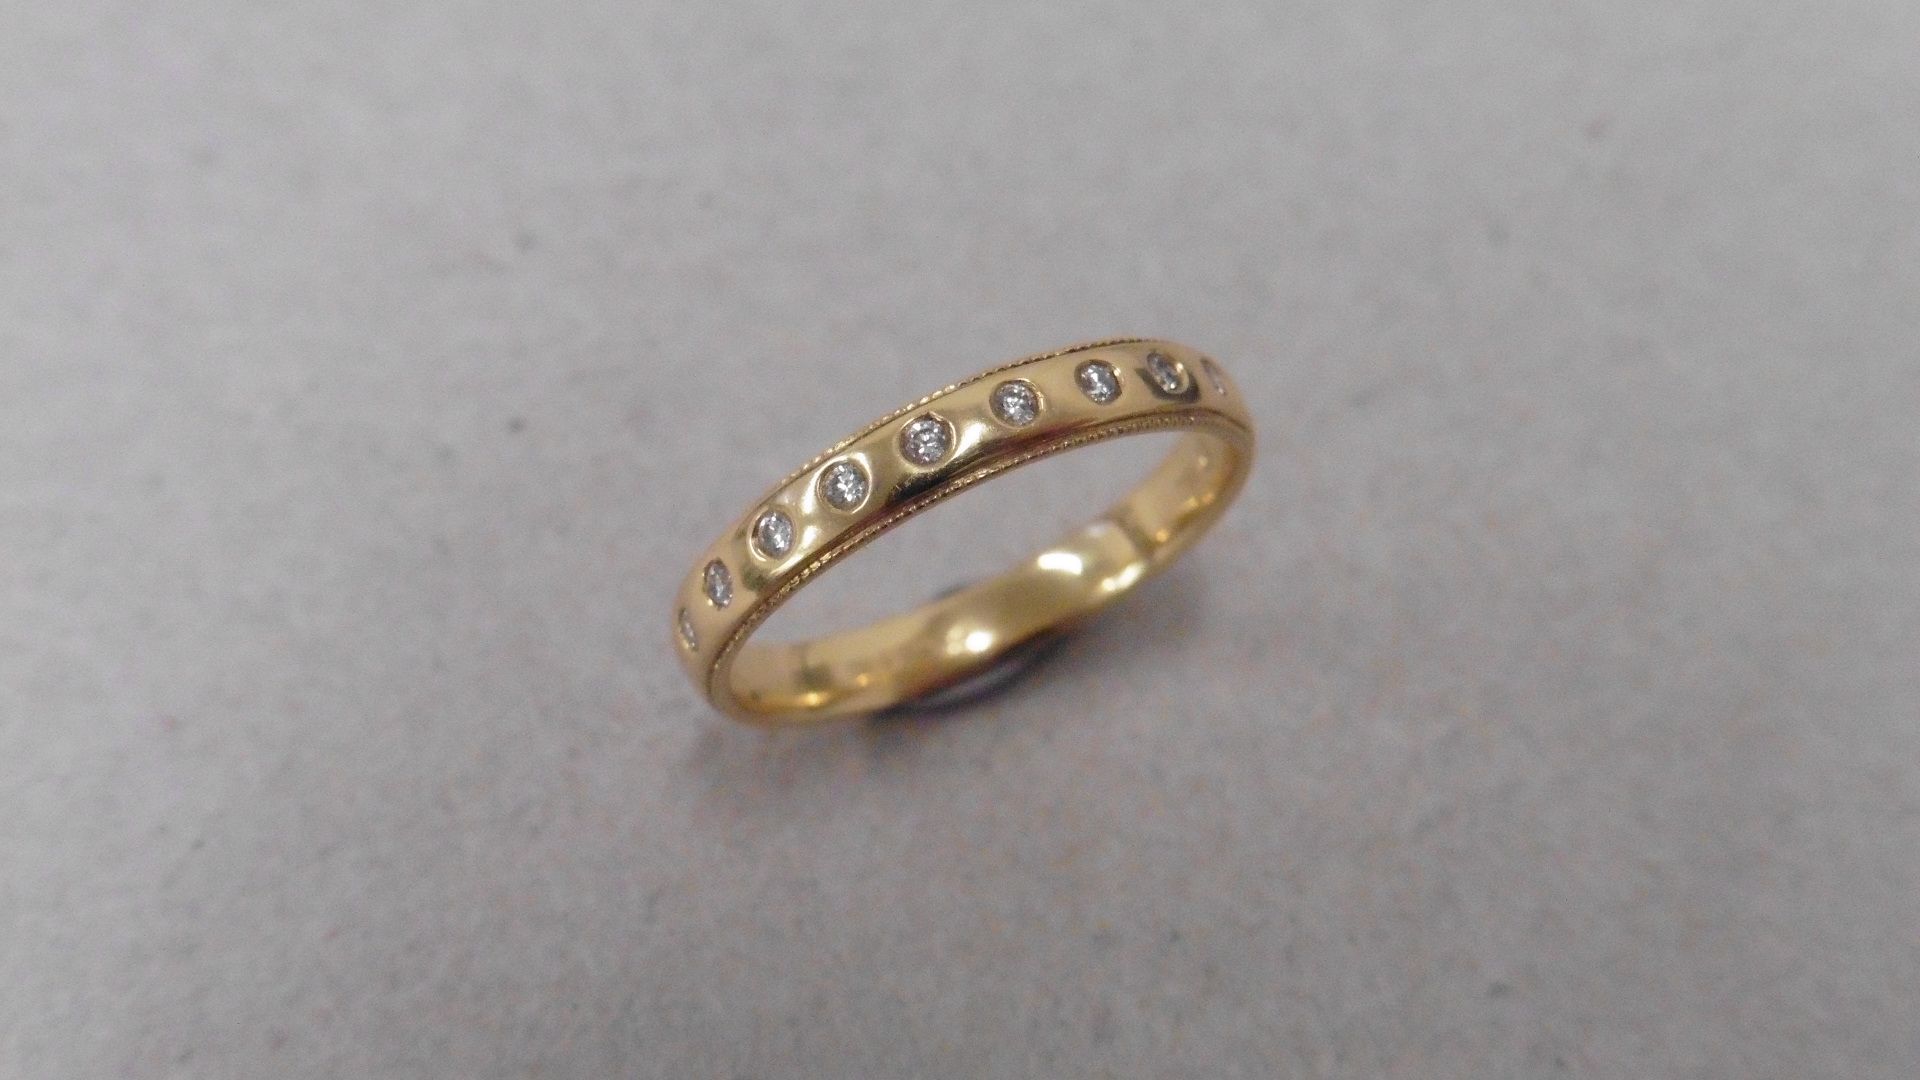 18ct yellow gold diamond set band ring. 9 small brilliant cut diamonds, H colour and si1-2